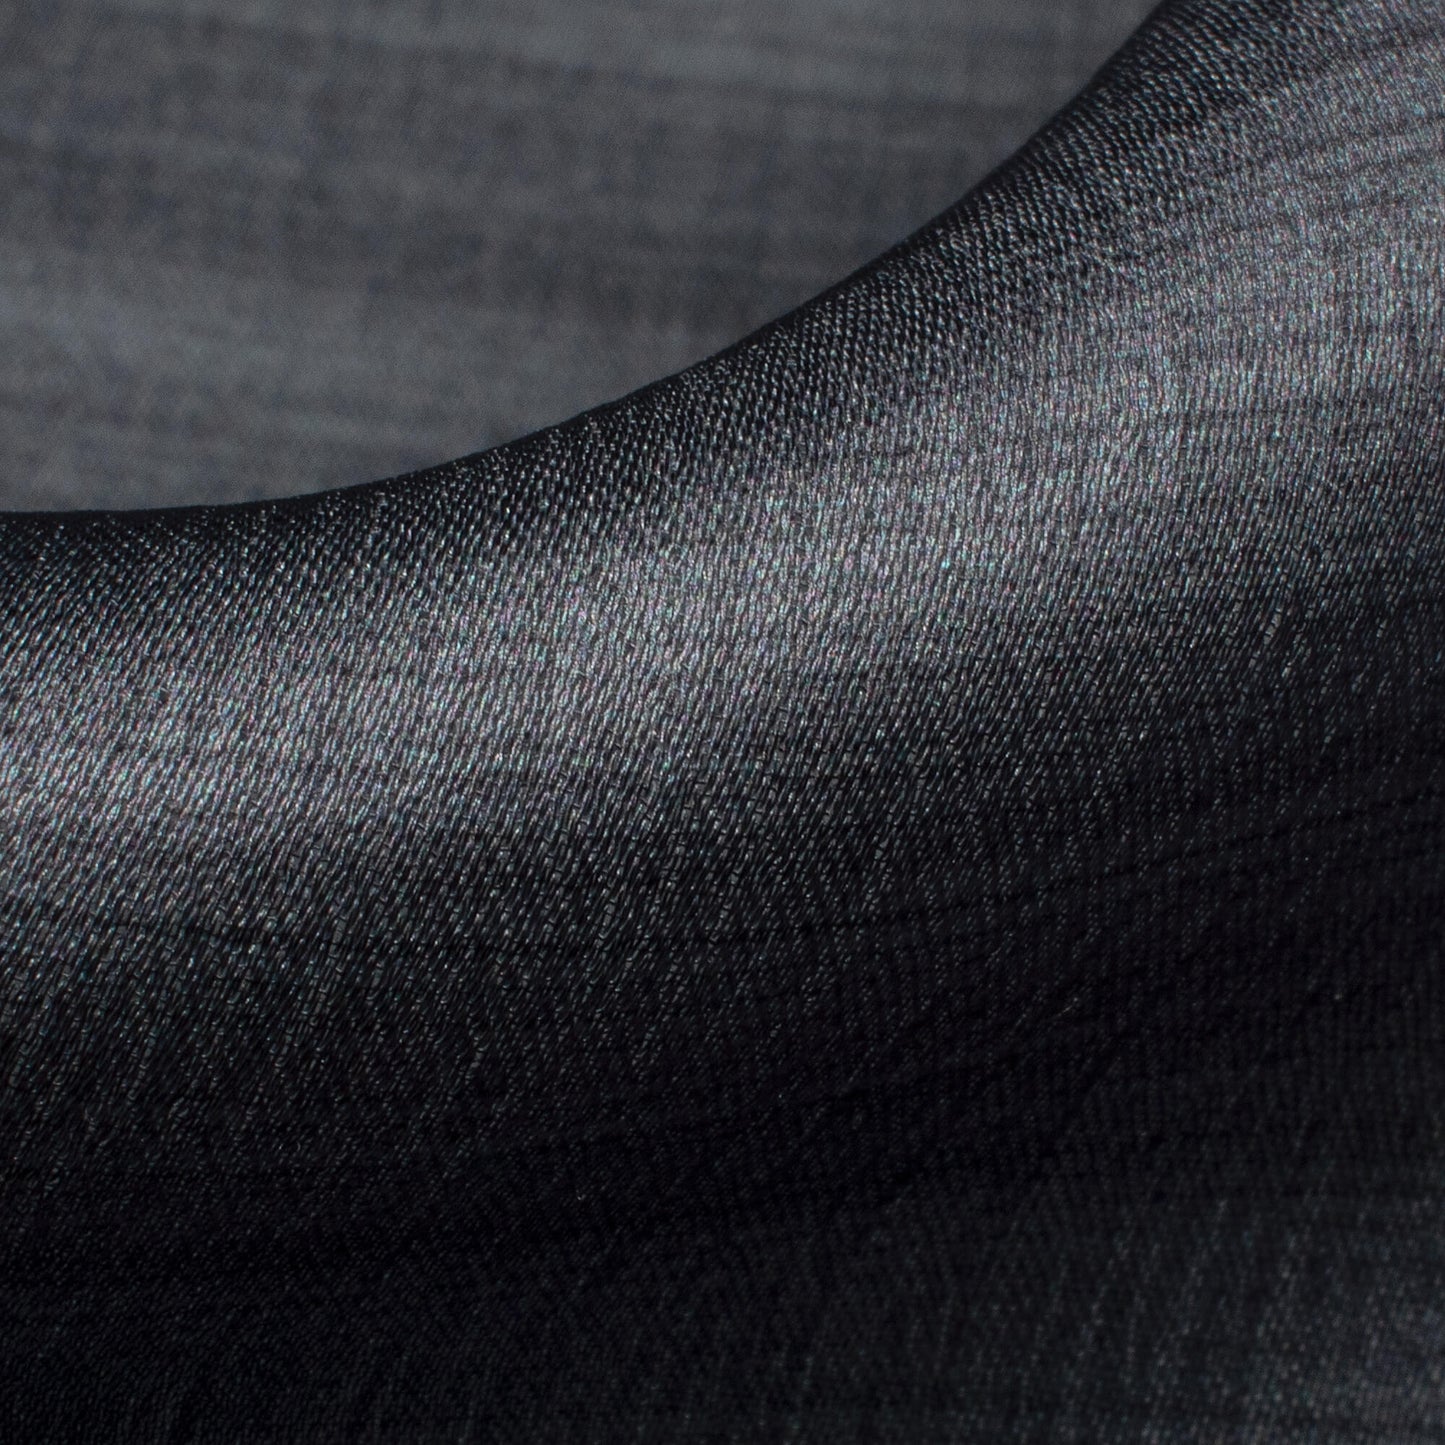 Iron Grey Texture Pattern Digital Print Chiffon Satin Fabric